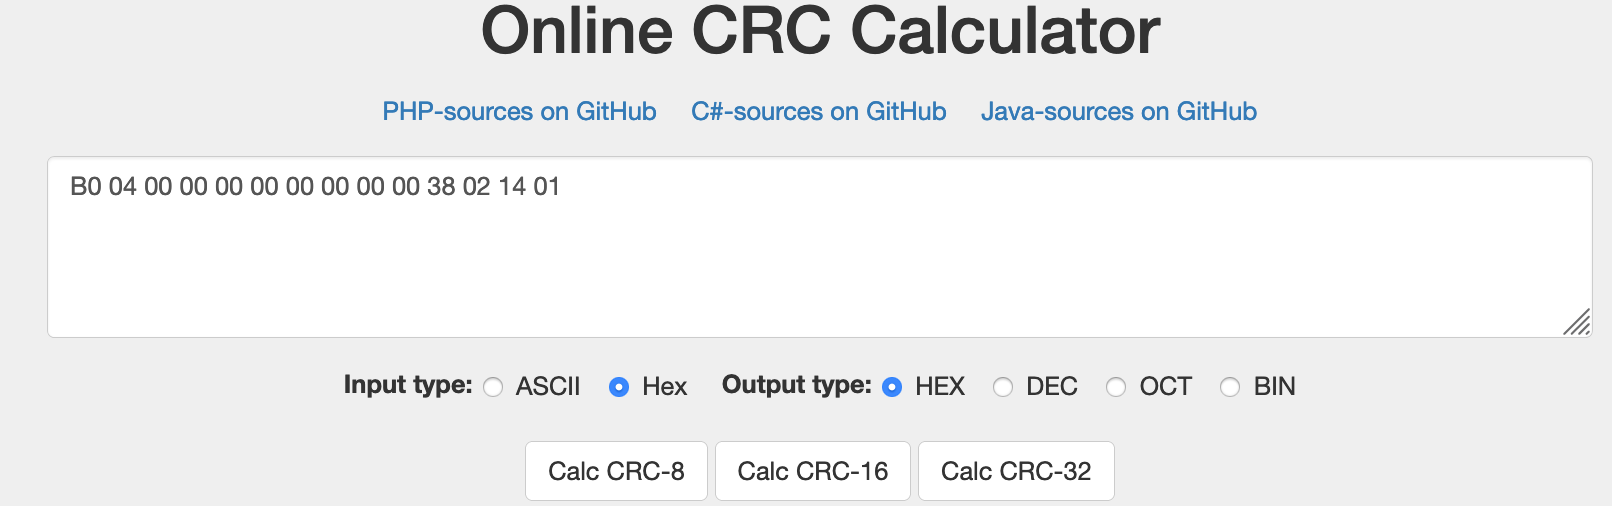 Online-CRC-Calculator